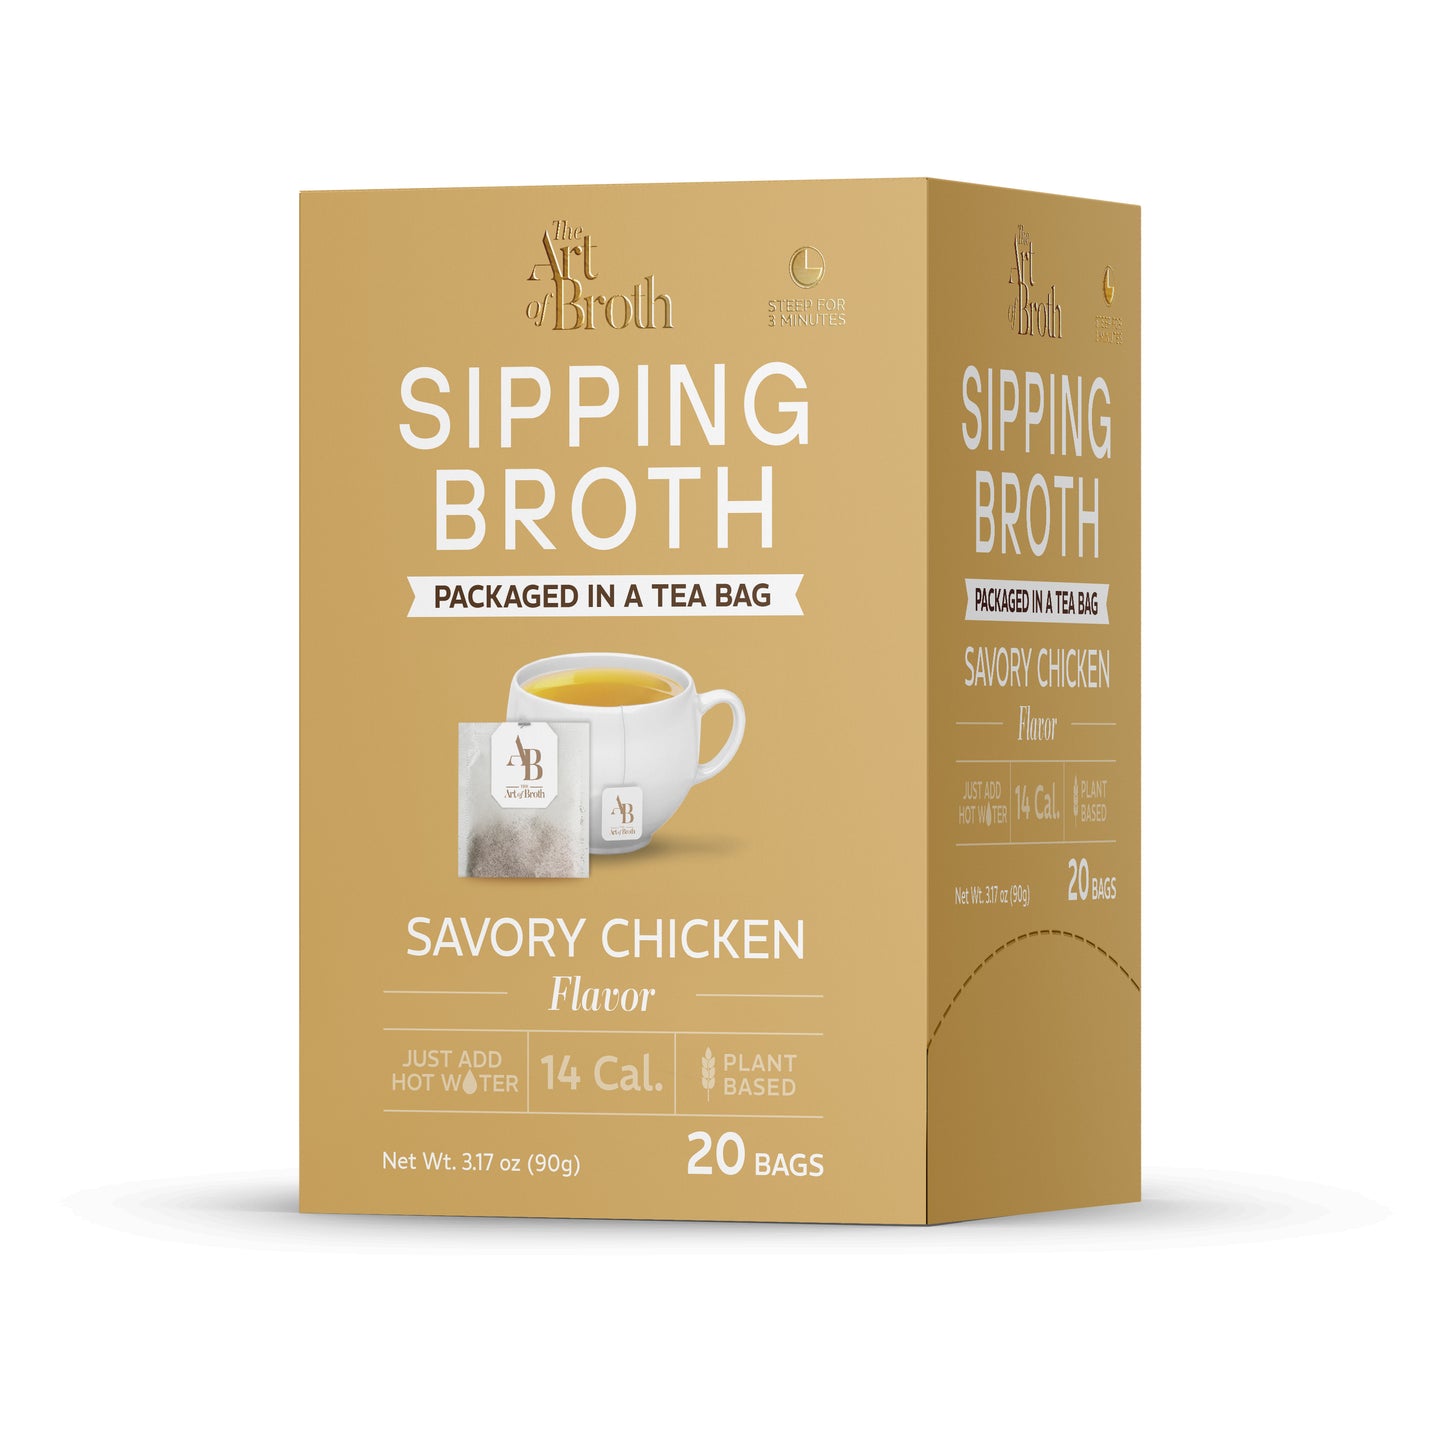 Savory Chicken Flavored Broth - Twenty Count